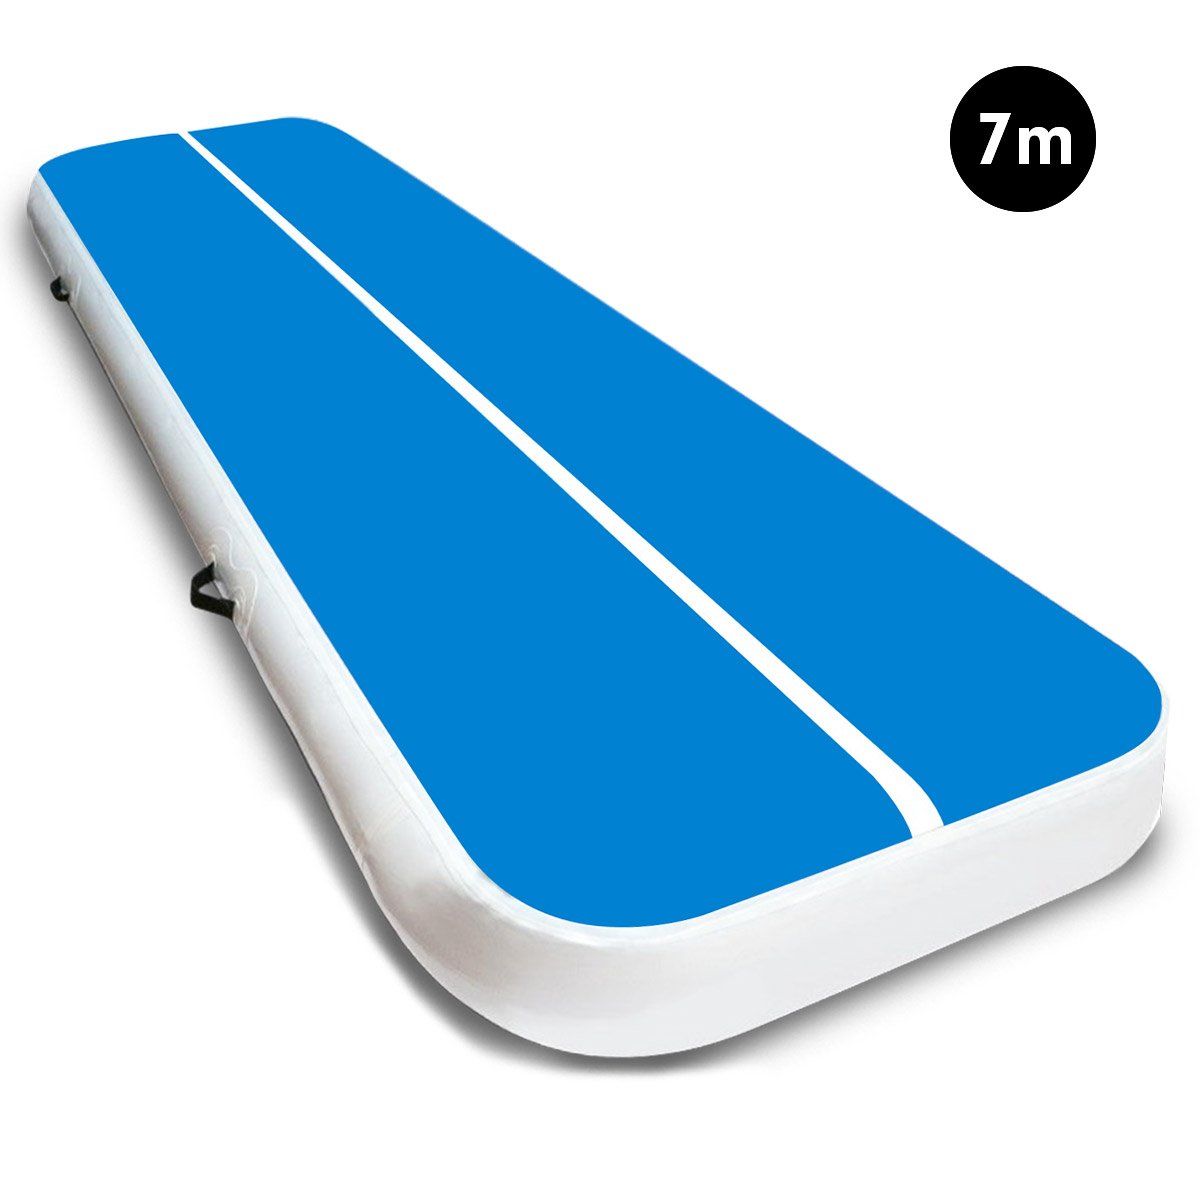 7m x 1m Air Track Inflatable Tumbling Gymnastics Mat - Blue White 1